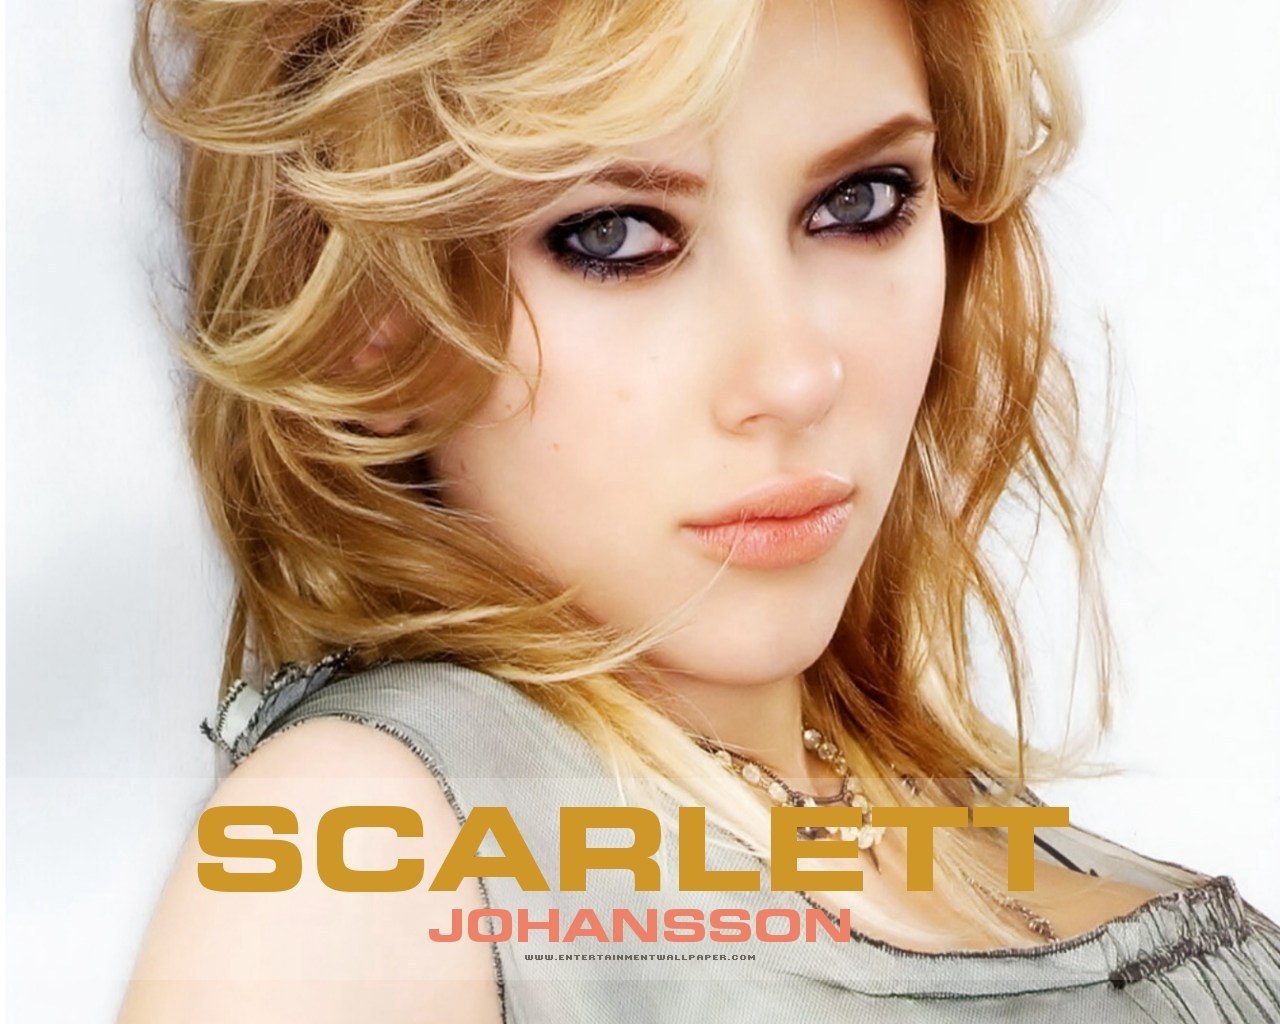 Scarlett Johansson Image Wallpaper Photos